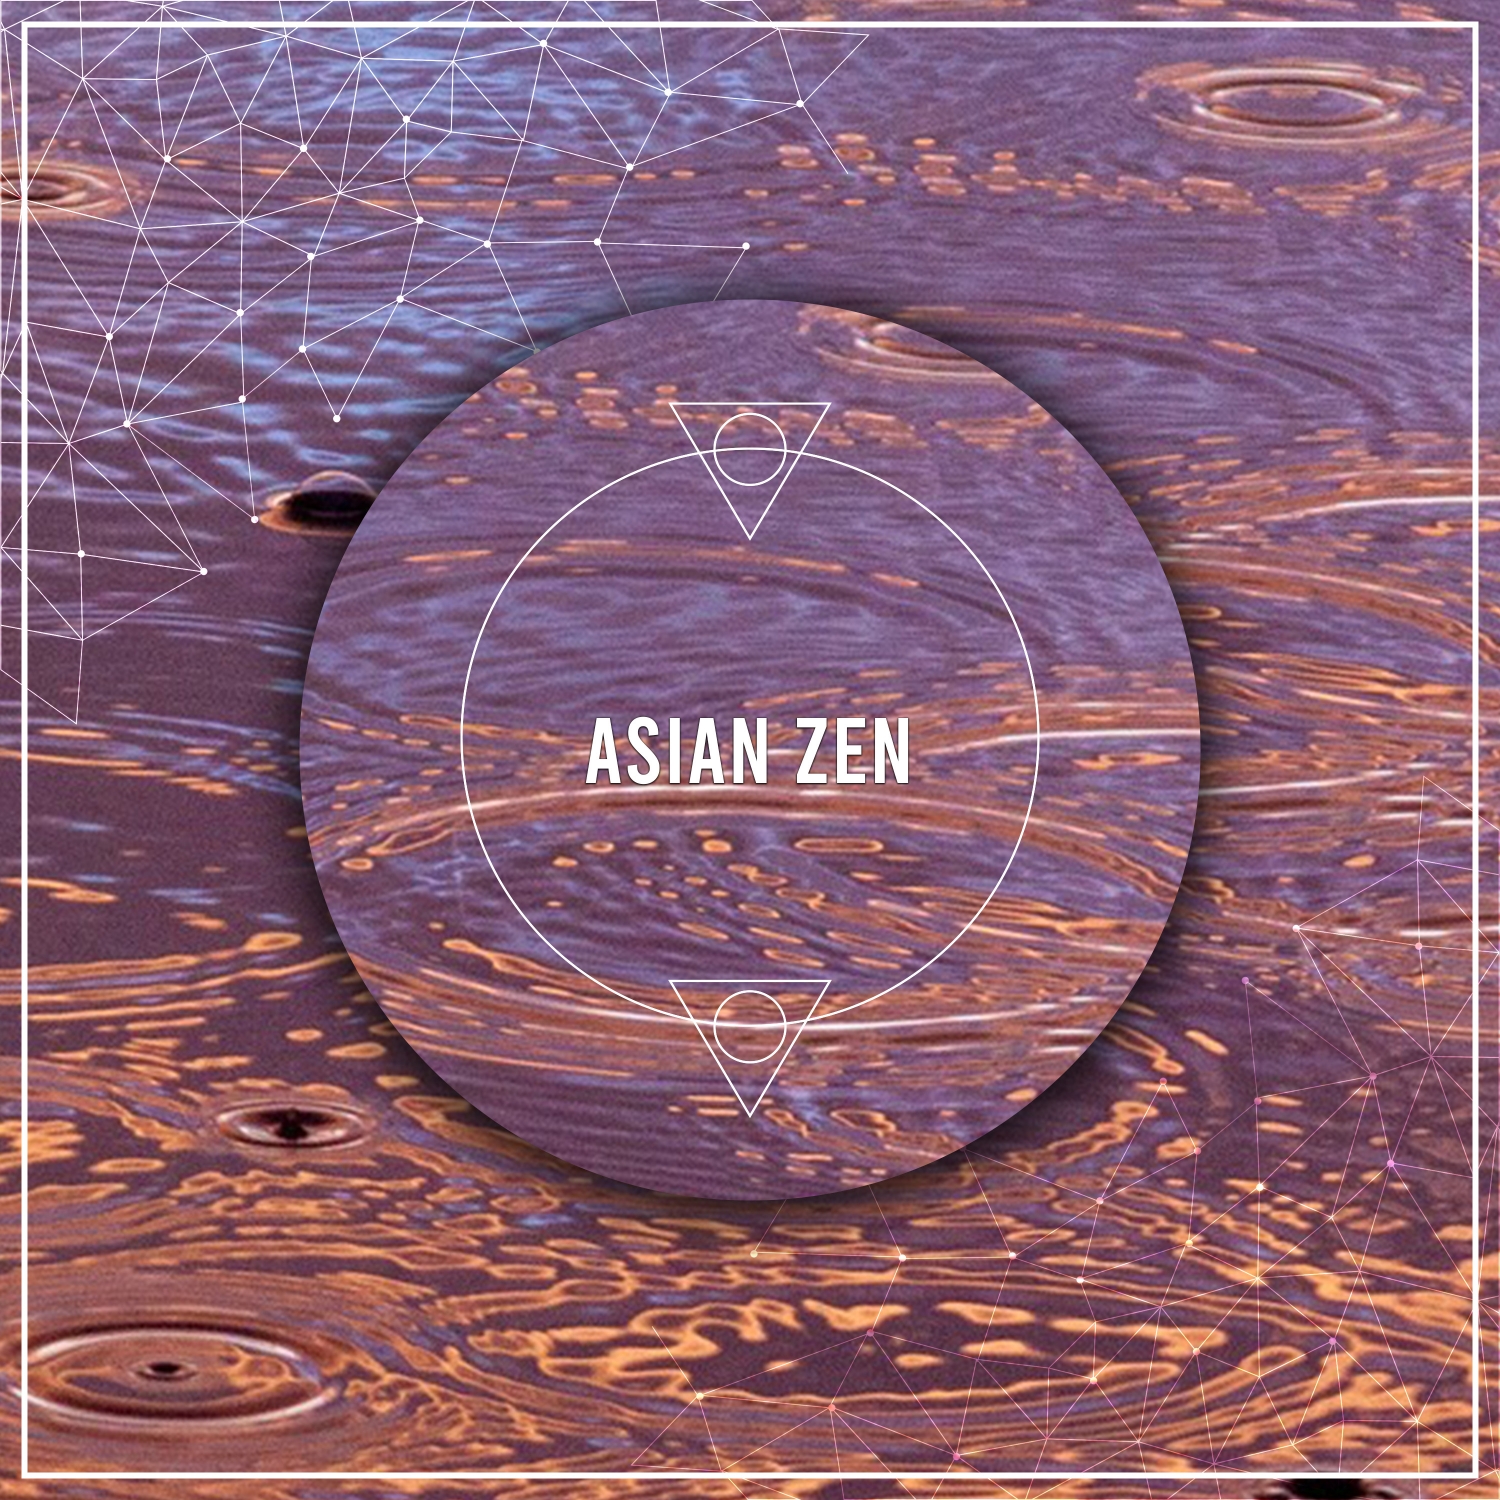 18 Asian Zen Songs to Still the Mind